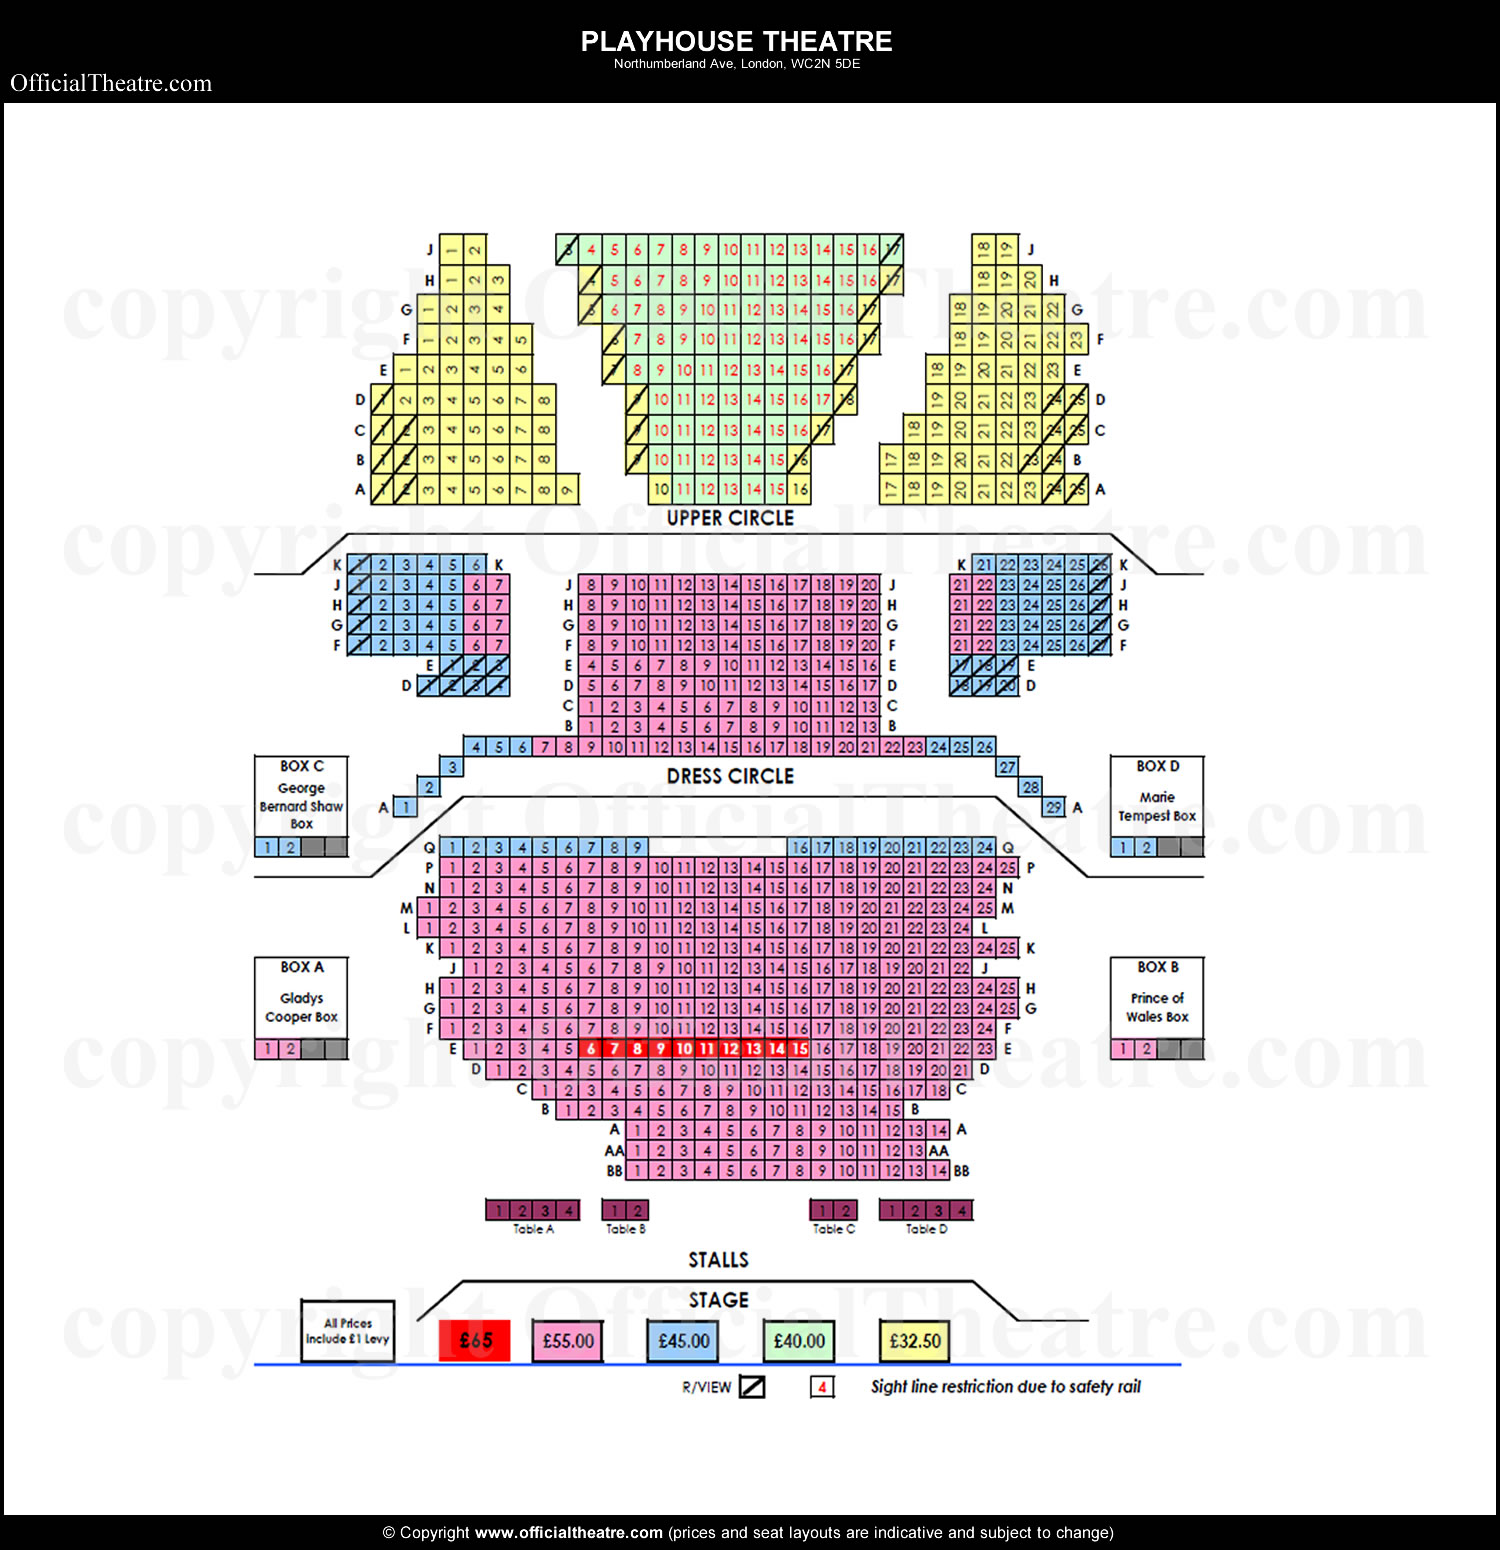 Playhouse Theatre seating plan